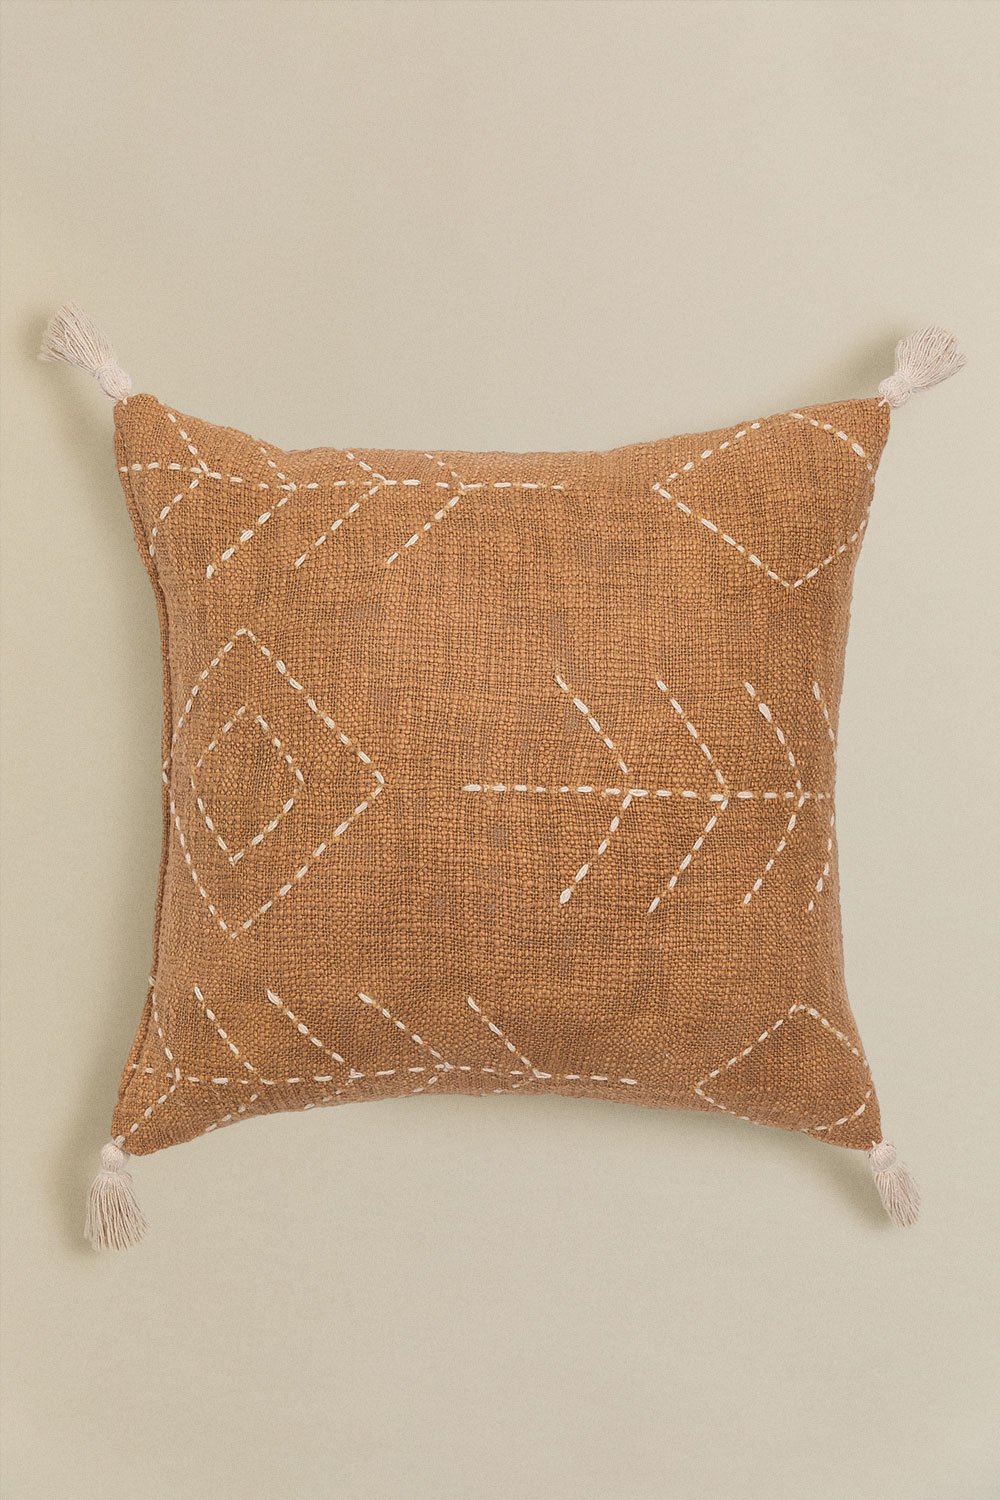 Square Cotton Cushion Lemes (45x45cm) , gallery image 1